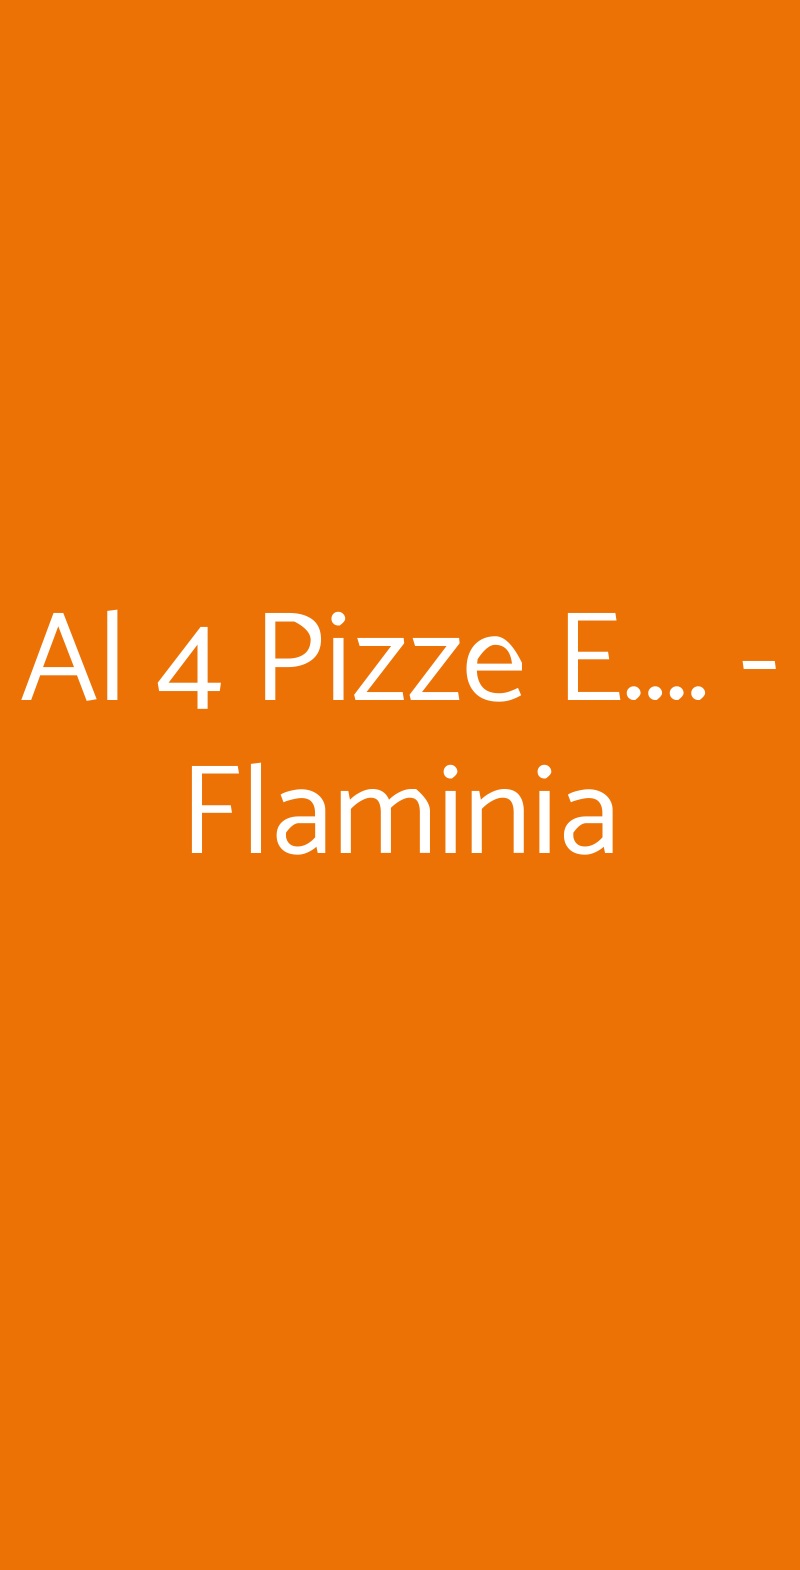 Al 4 Pizze E.... - Flaminia Roma menù 1 pagina